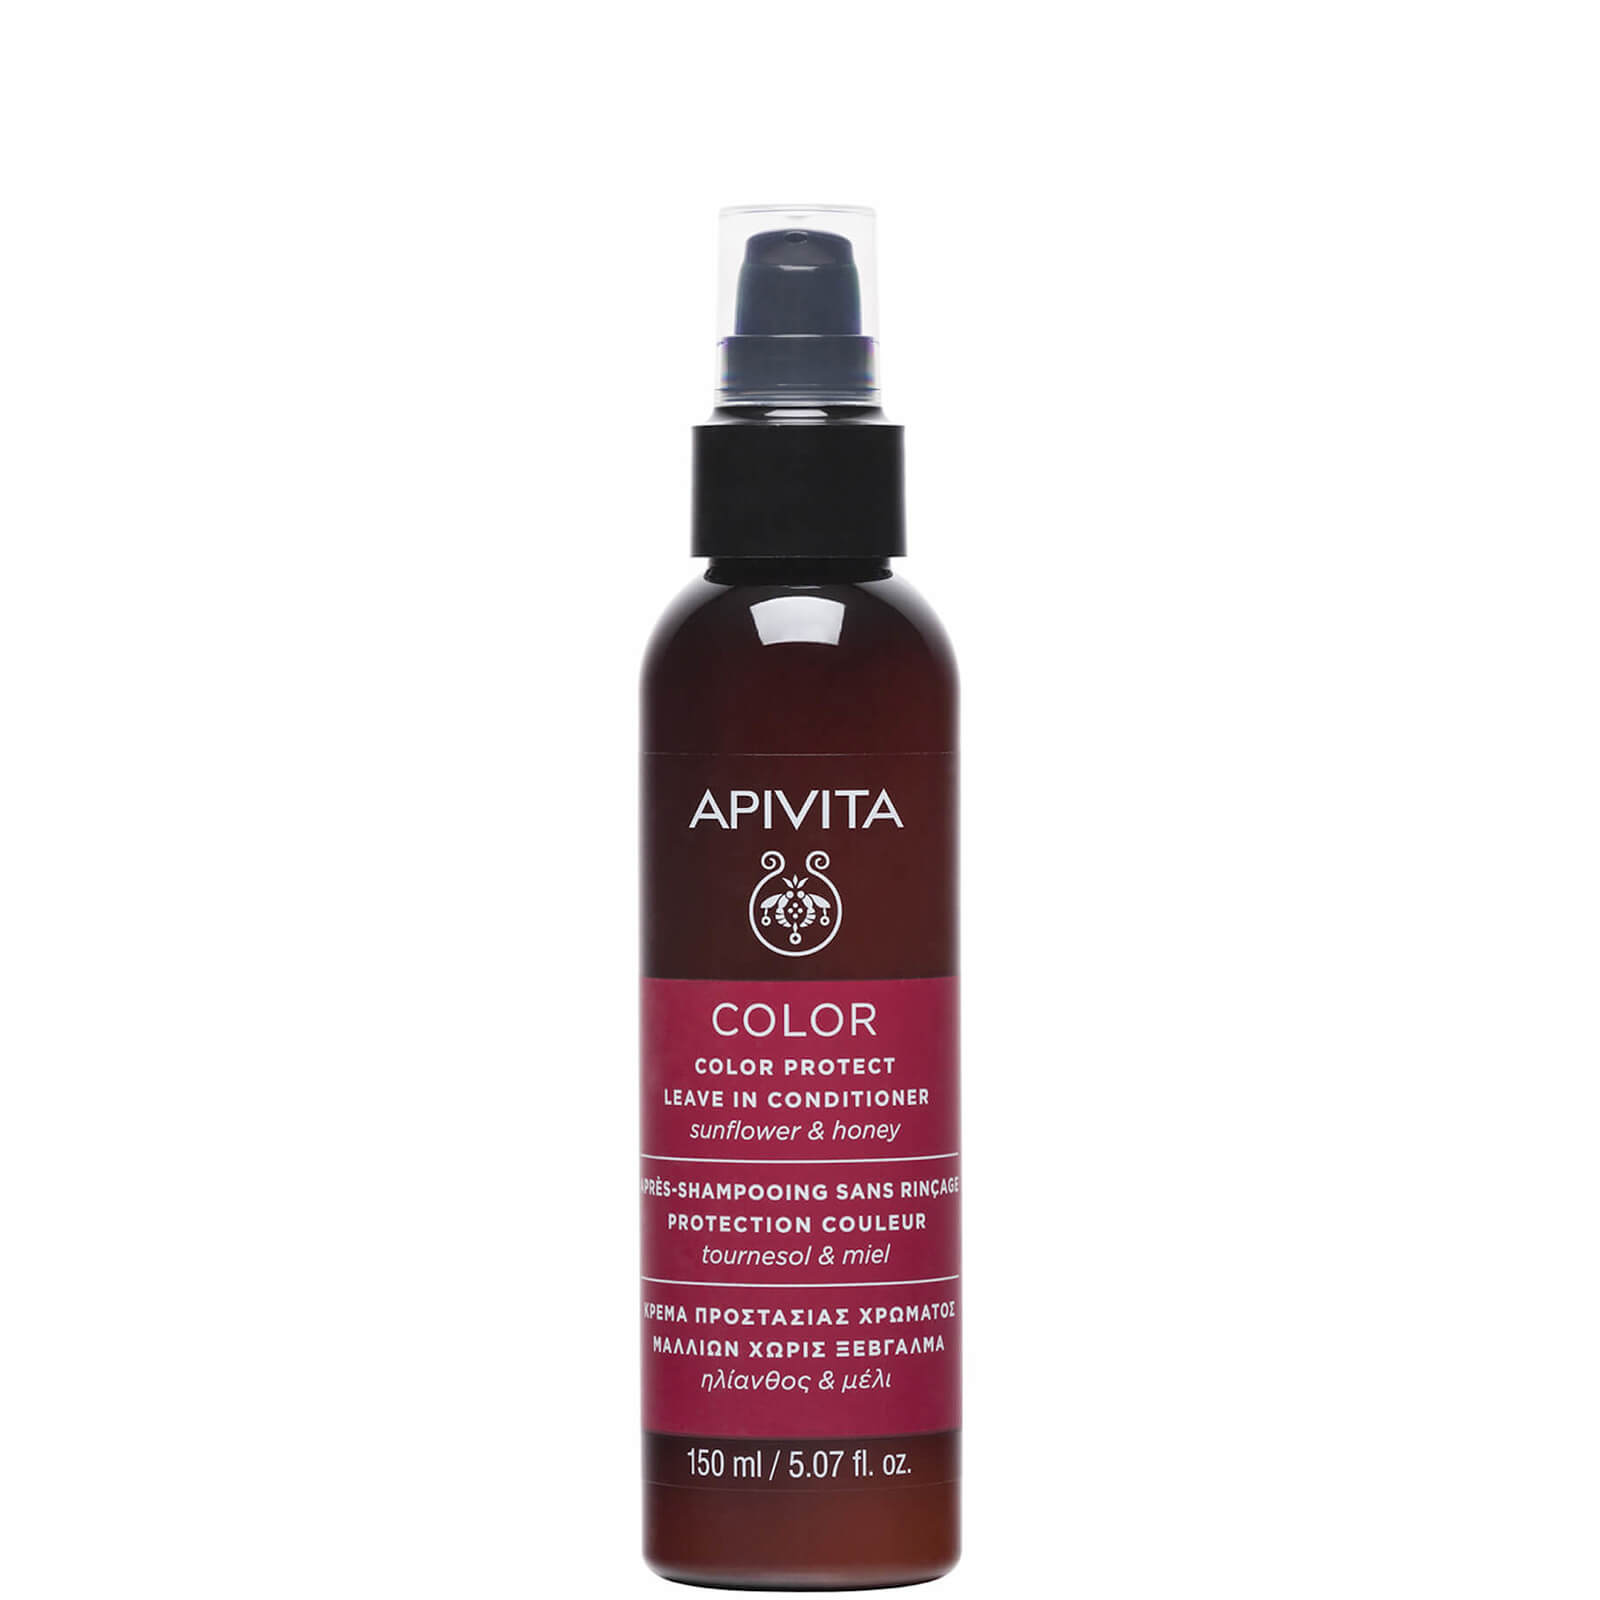 APIVITA 全面护发系列护色免洗护发素 150ml | 向日葵和蜂蜜